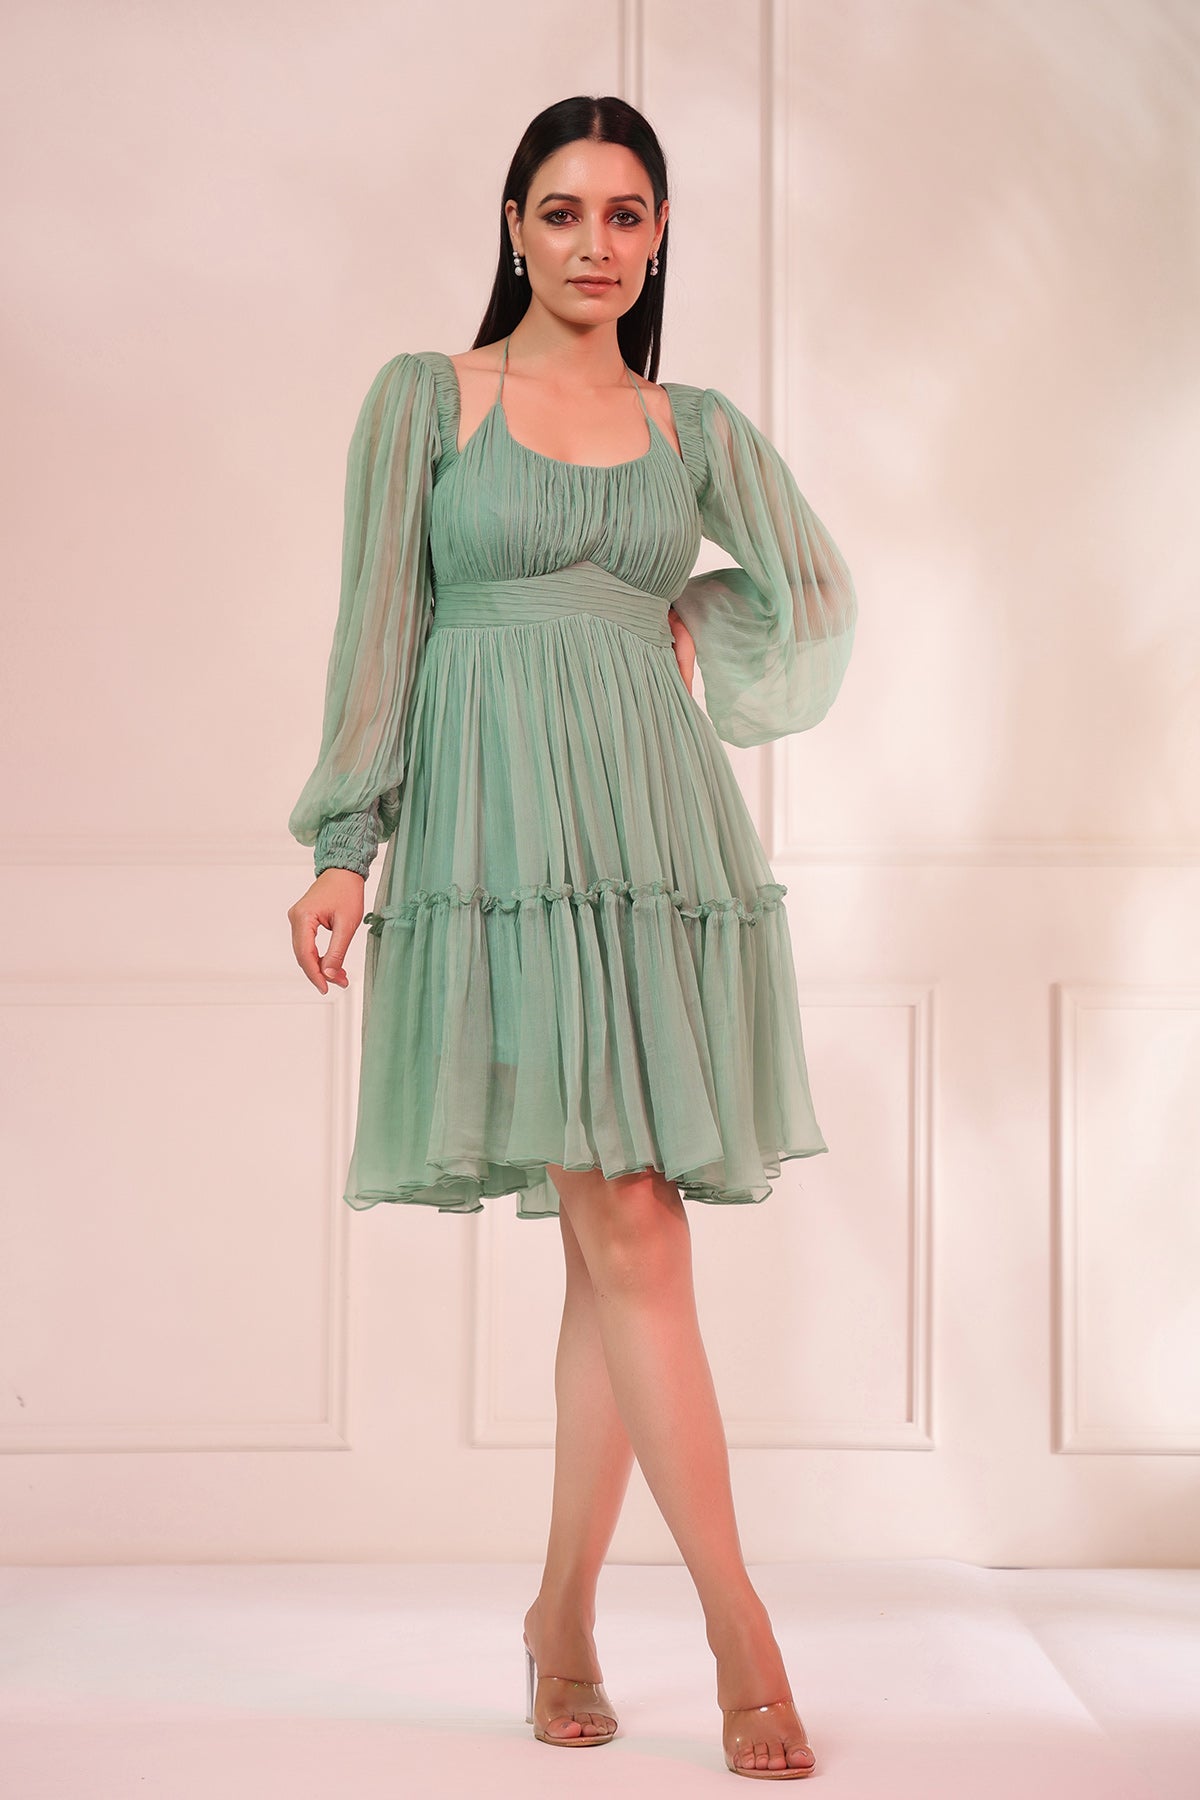 Aria Pine Green Dress- RTS